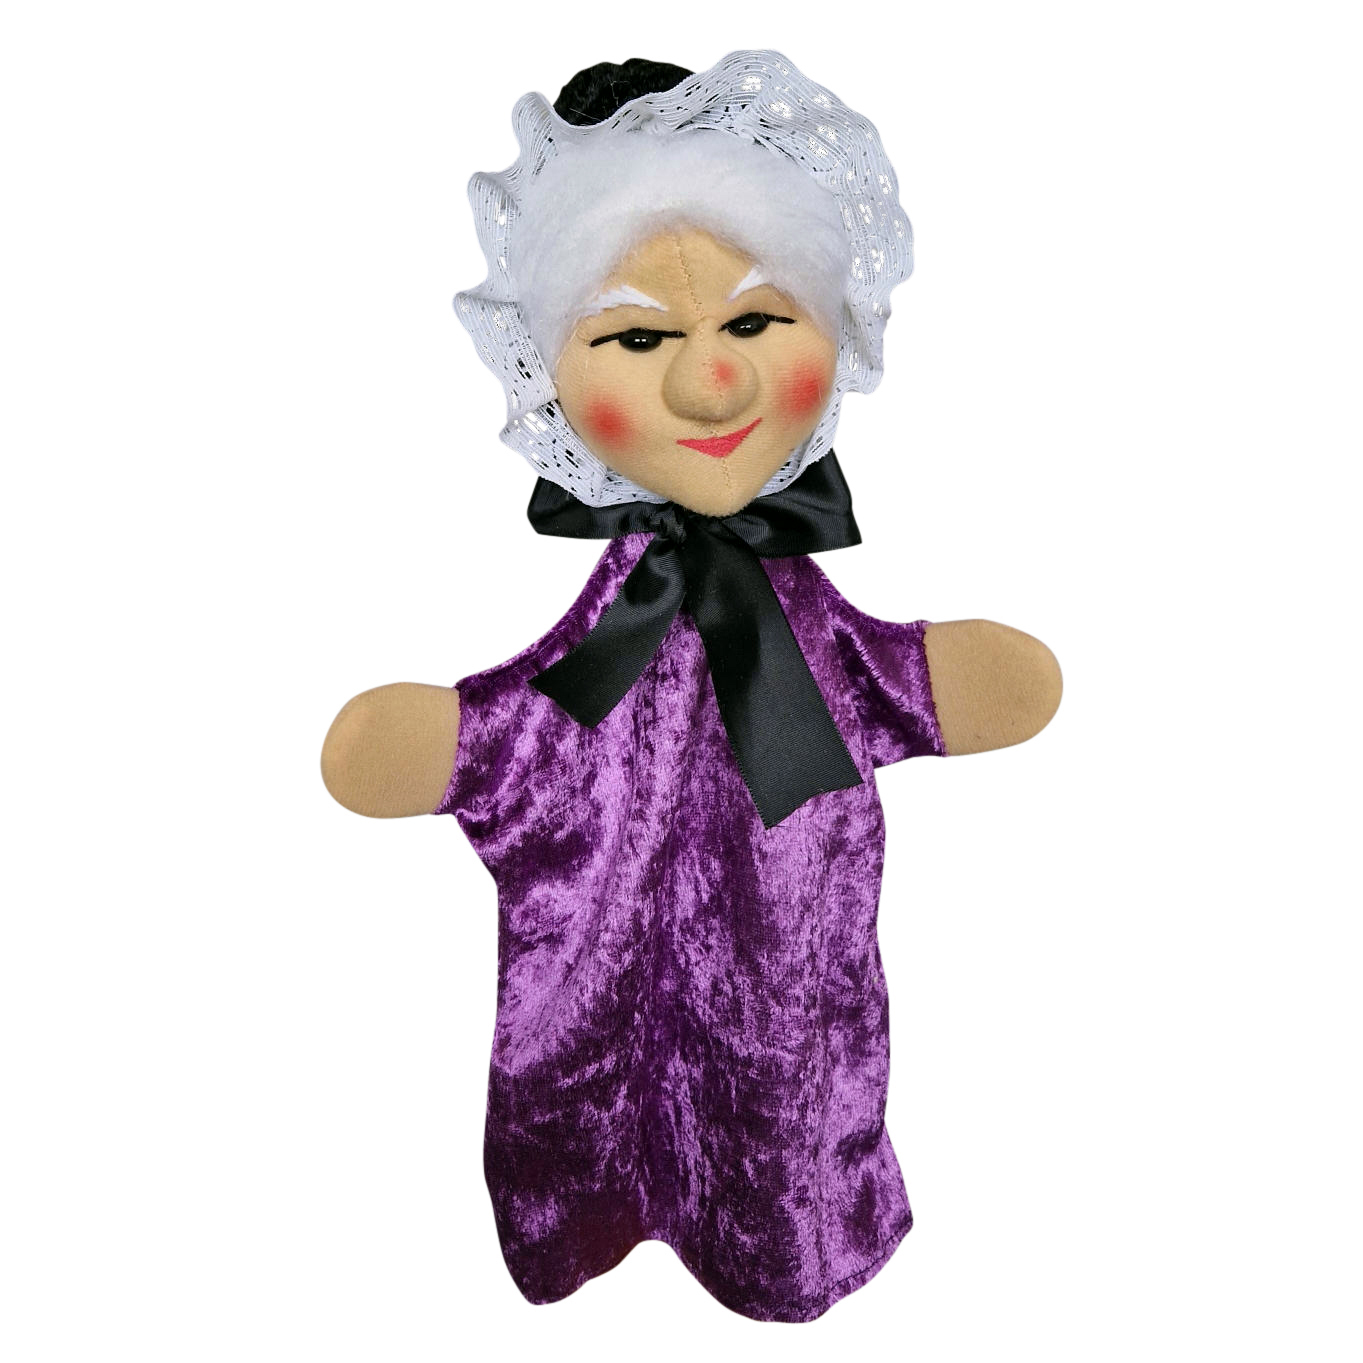 Hand puppet grandmother - KERSA classic